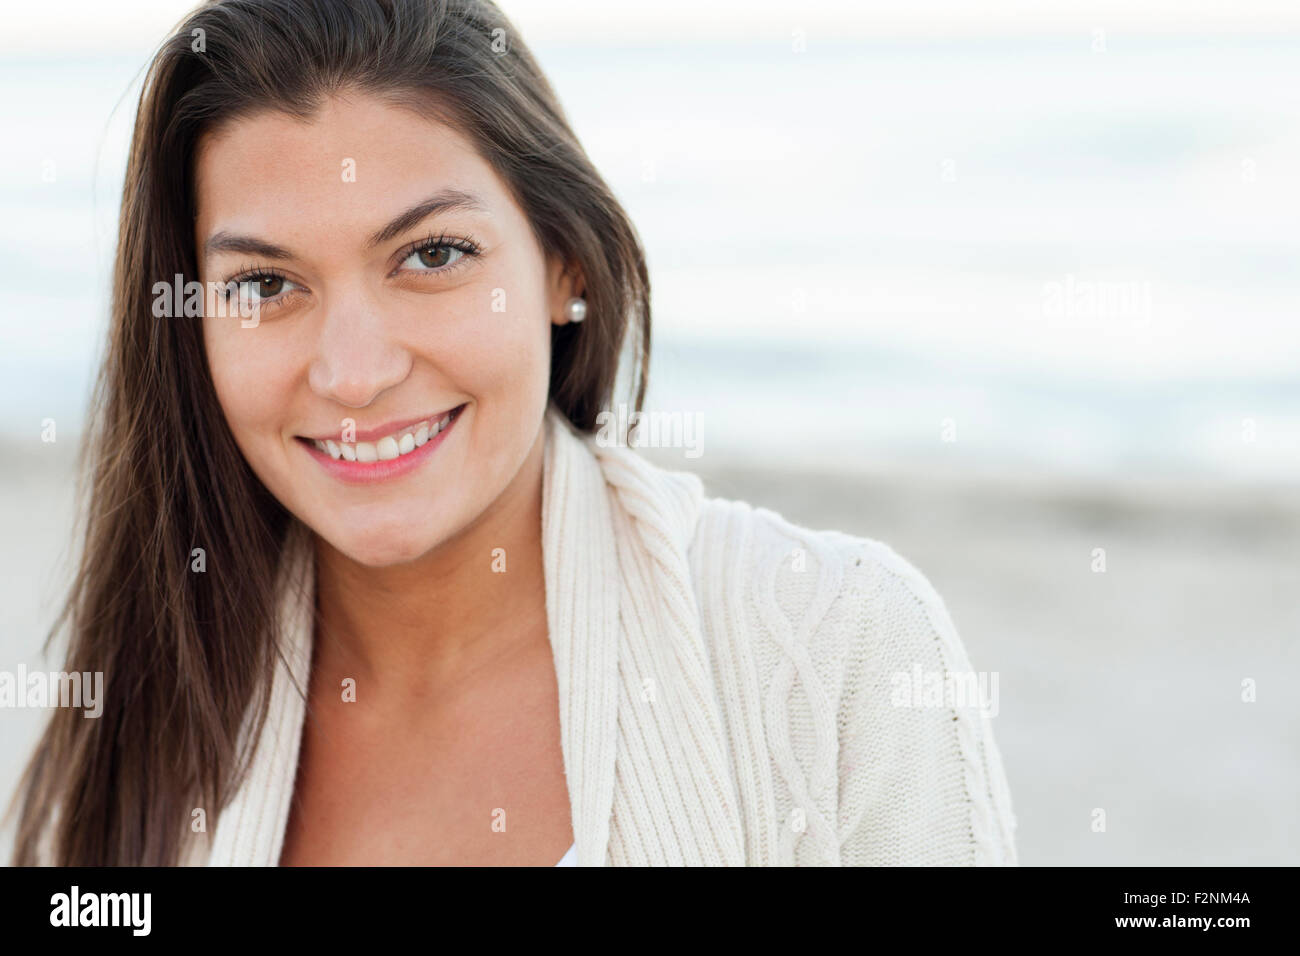 Hispanic woman smiling on beach Stock Photo